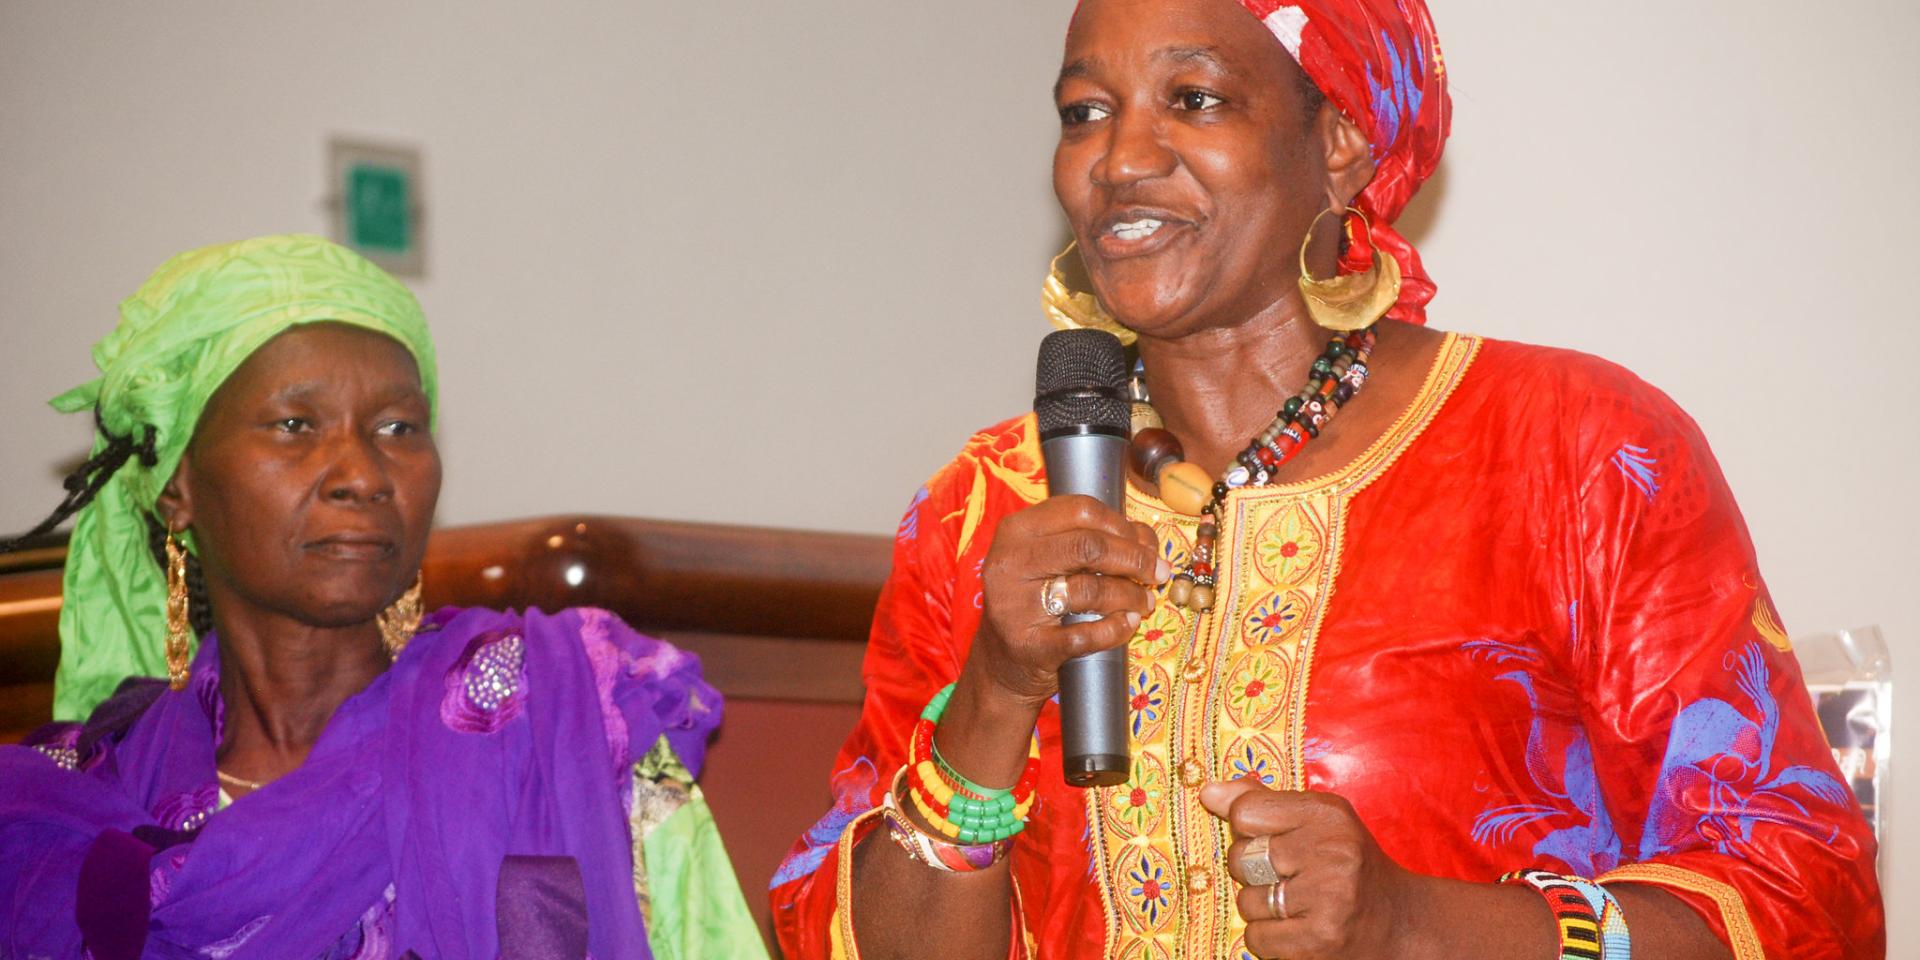 Malian woman with microphone